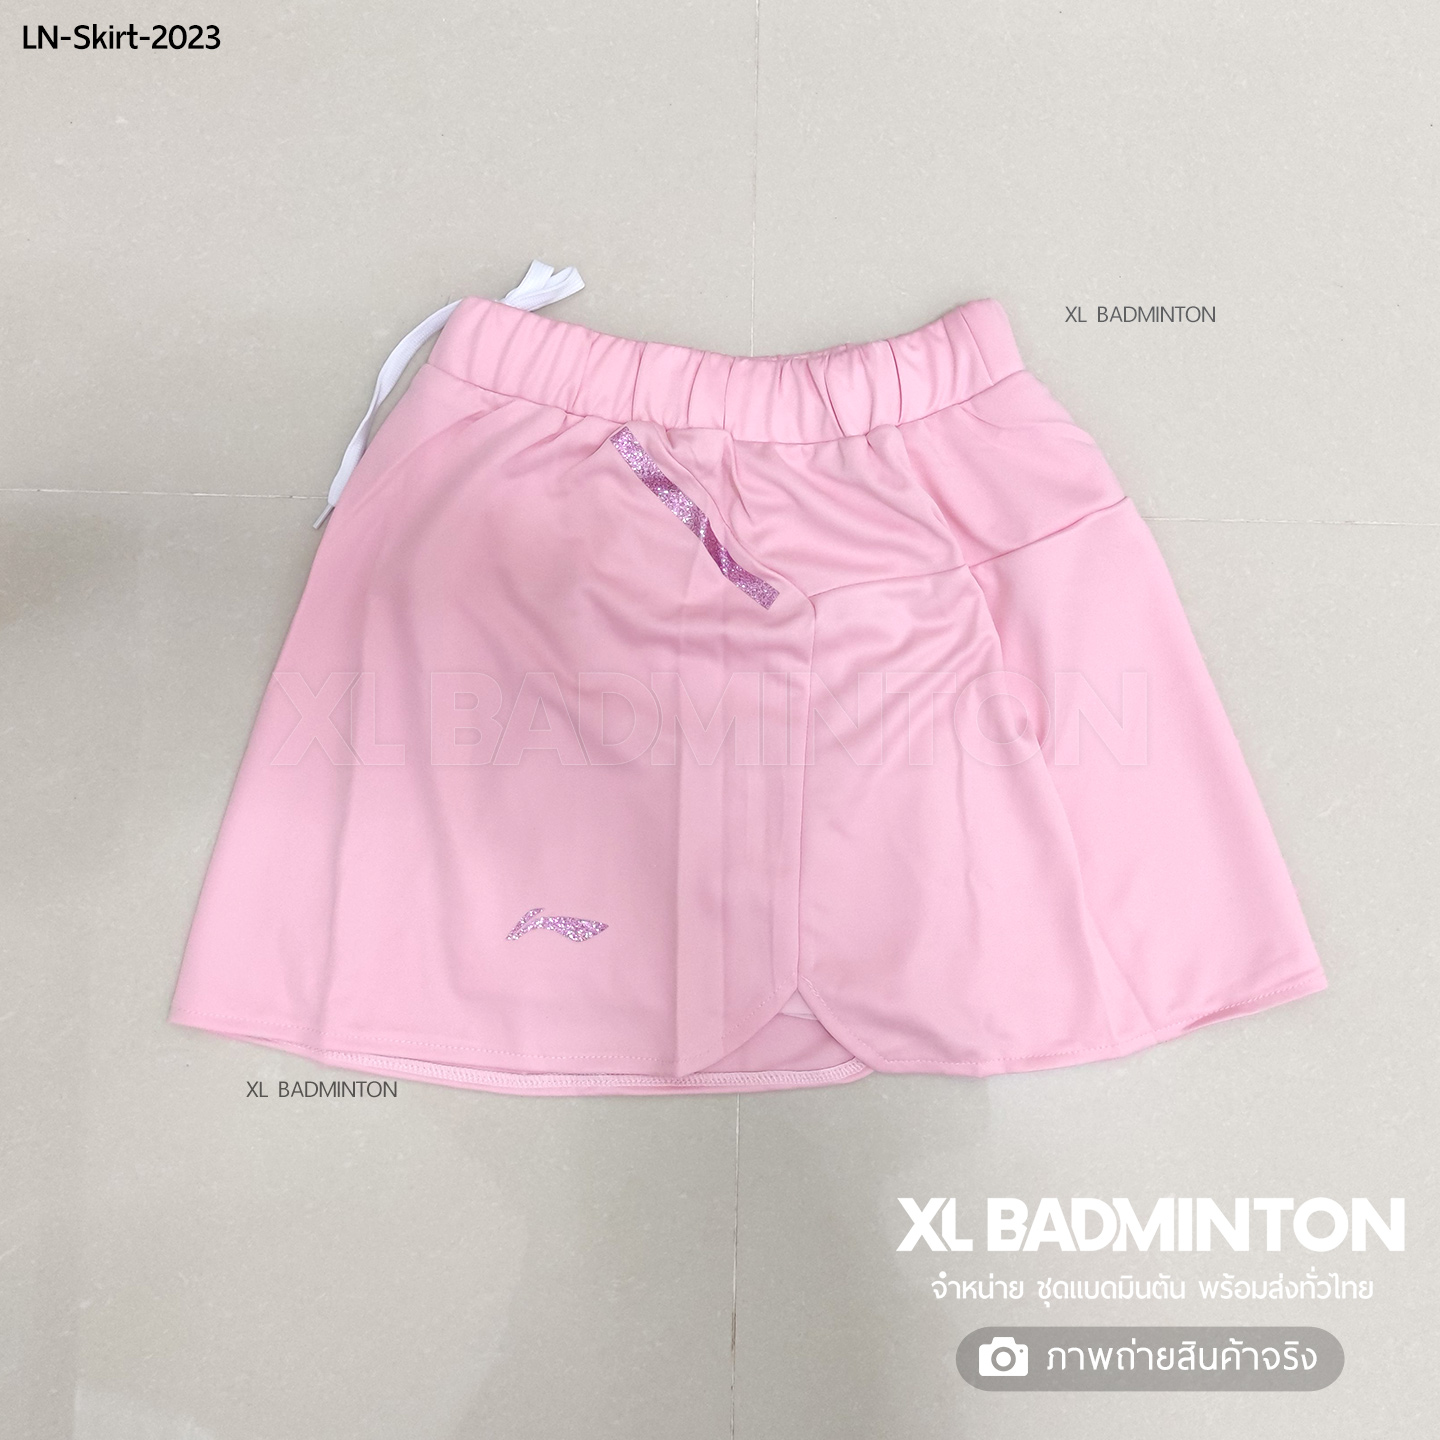 ln-skirt-2023-pink-2x